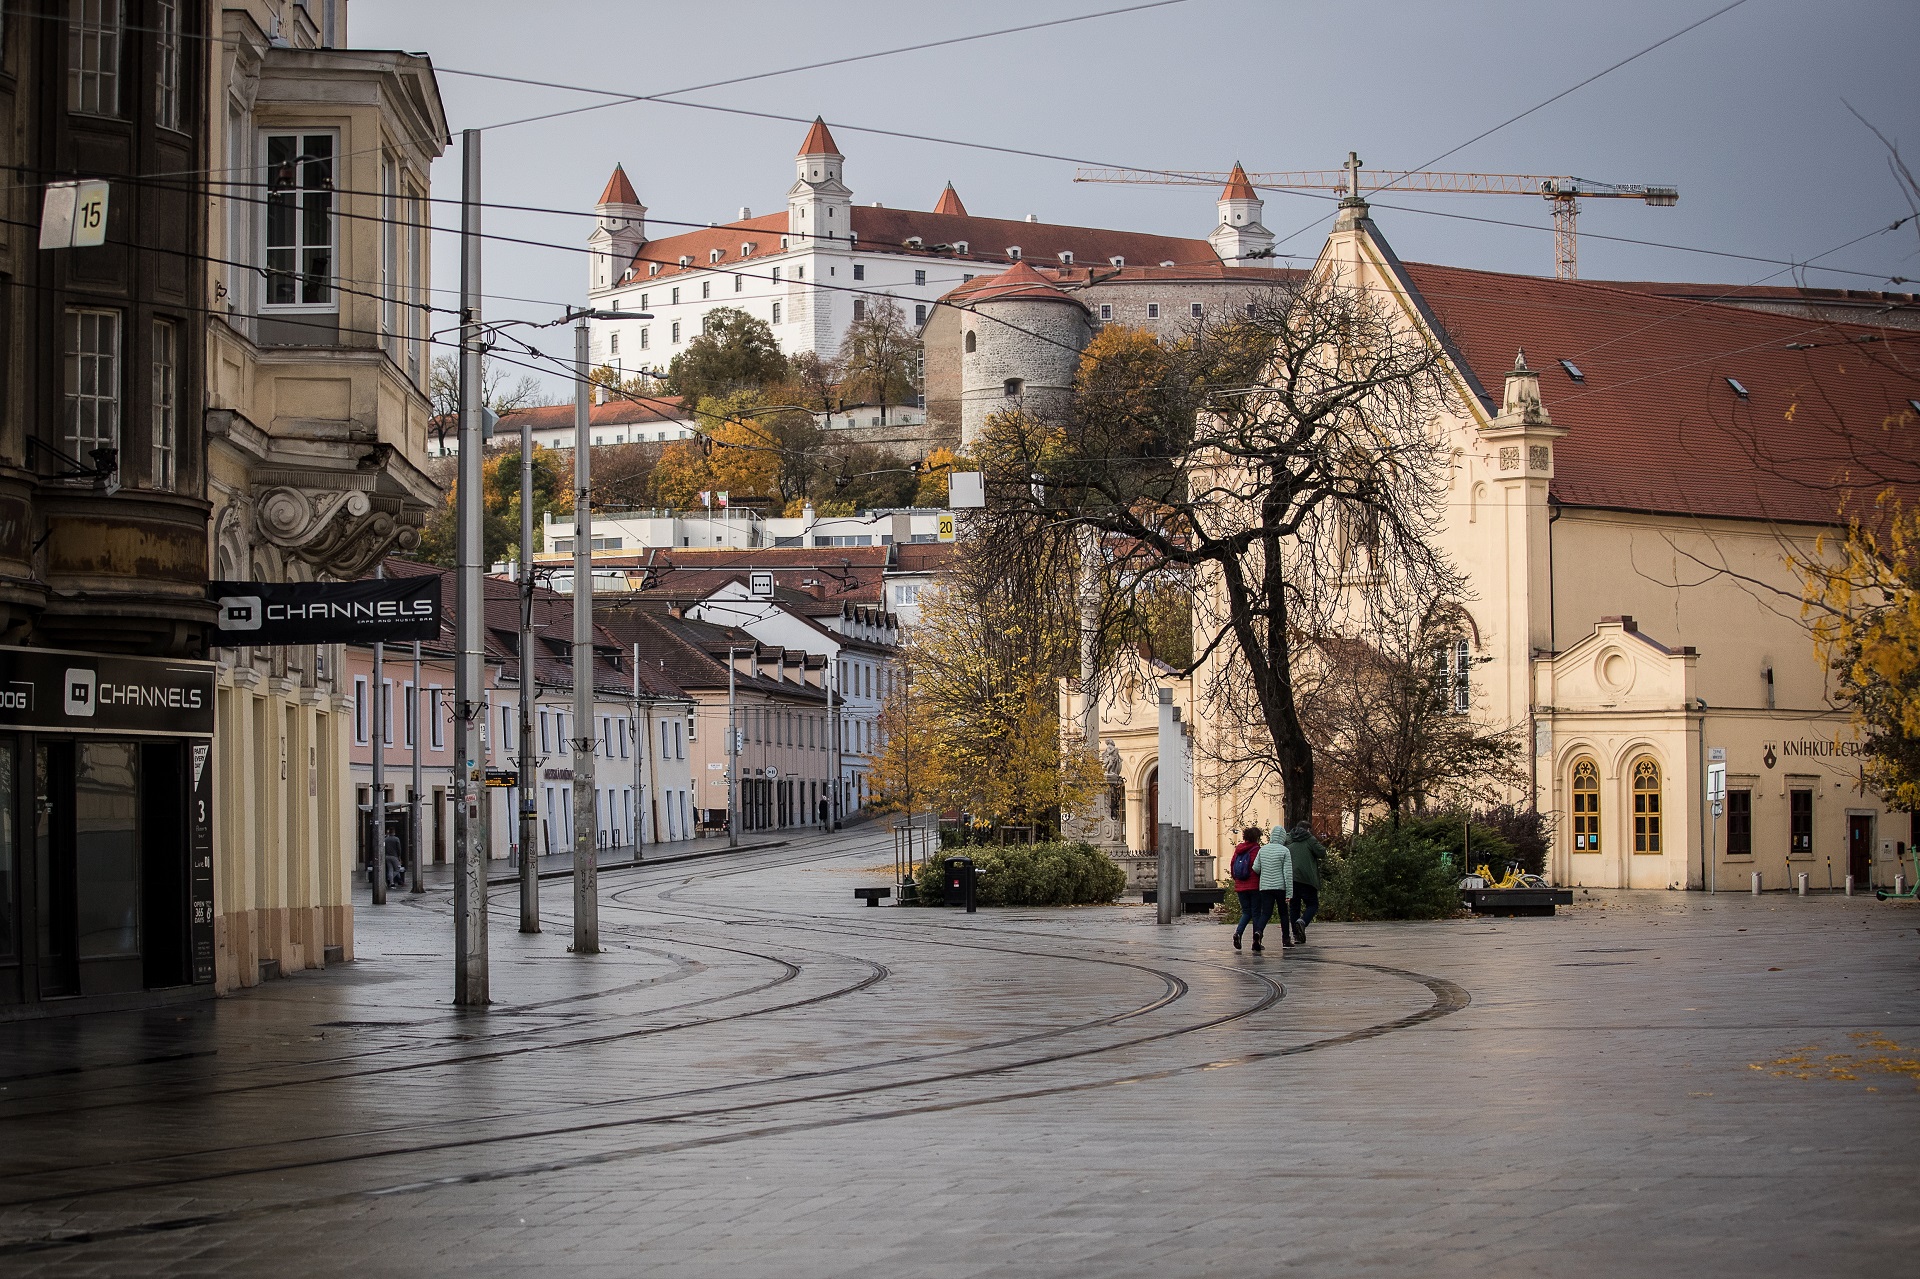 epa08788091 A view of the empty city center with the Bratislava Castle in Bratislava, Slovakia, 31 October 2020.  EPA/JAKUB GAVLAK